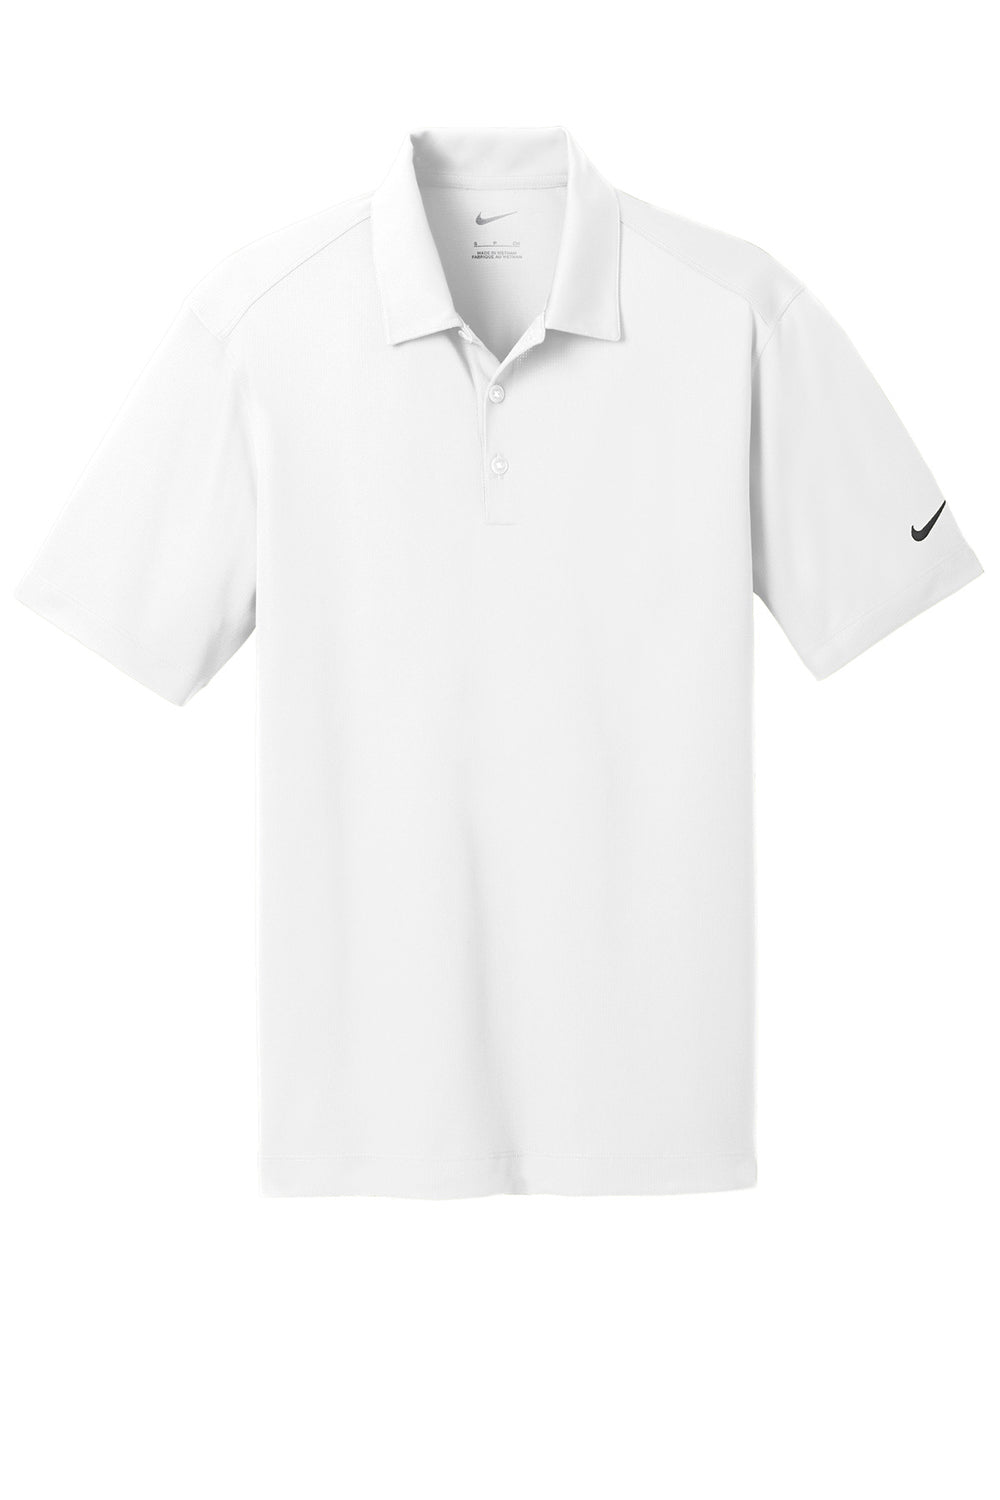 Nike 637167 Mens Dri-Fit Moisture Wicking Short Sleeve Polo Shirt White Flat Front